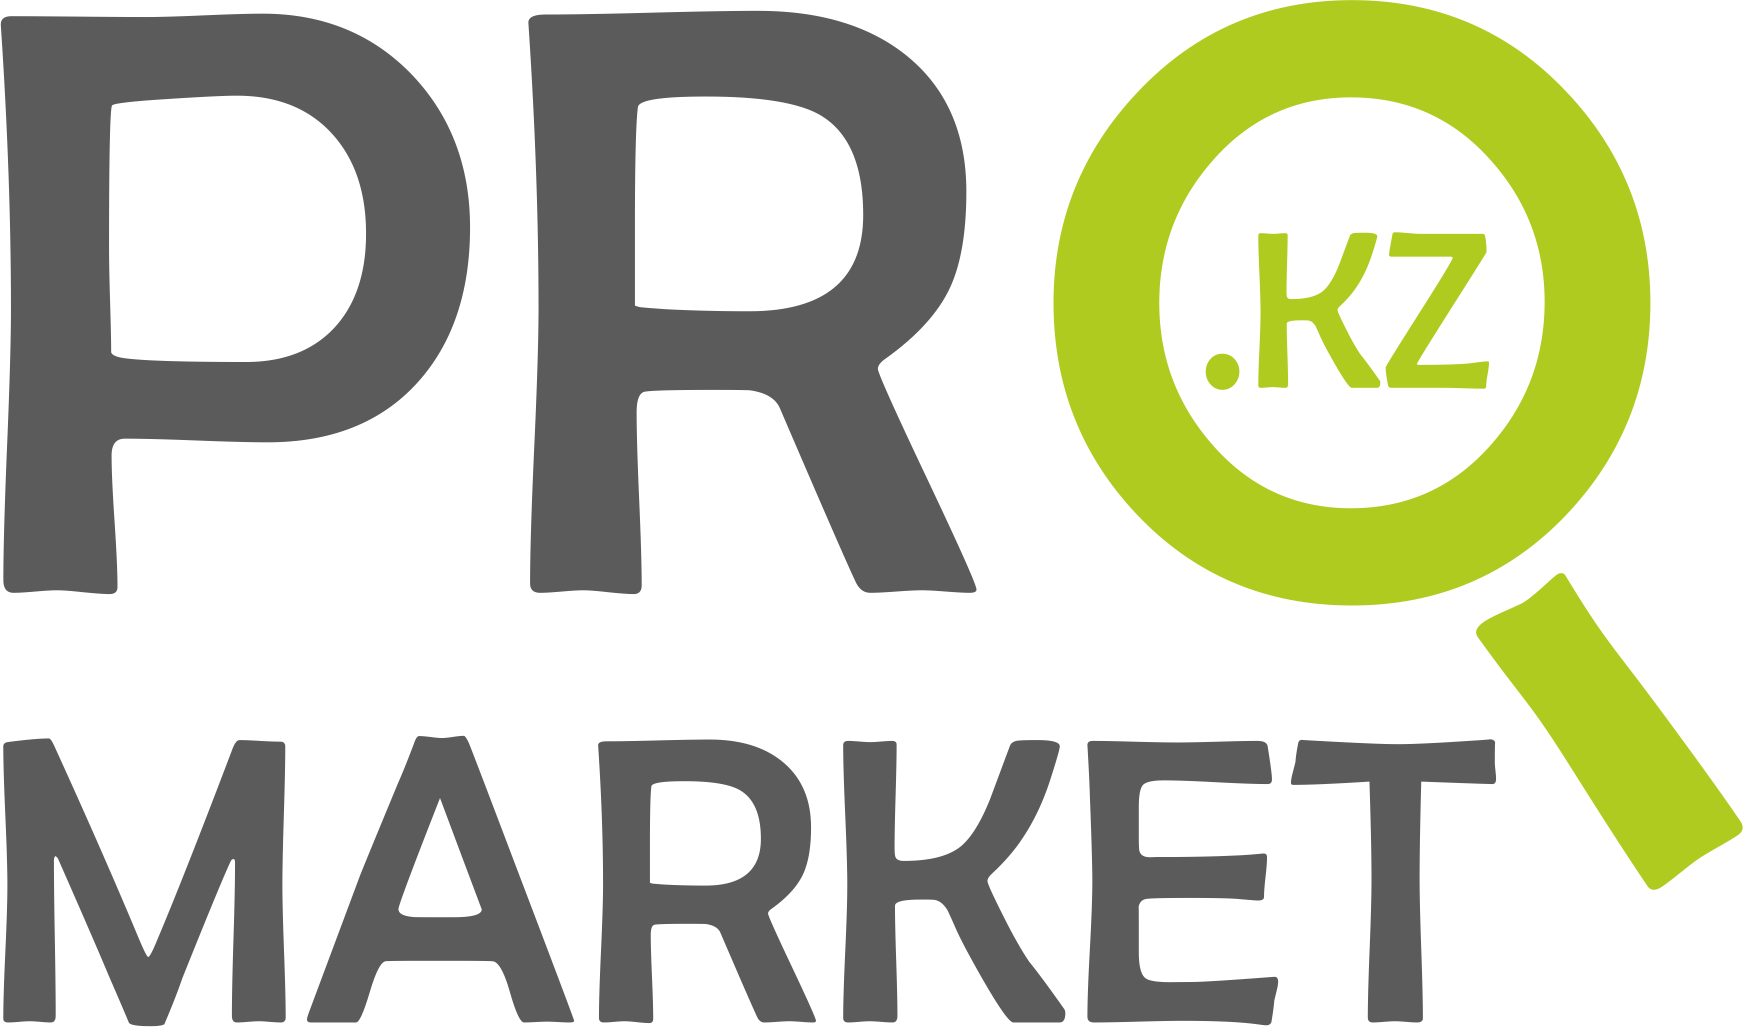 Promarket.kz - страхование онлайн